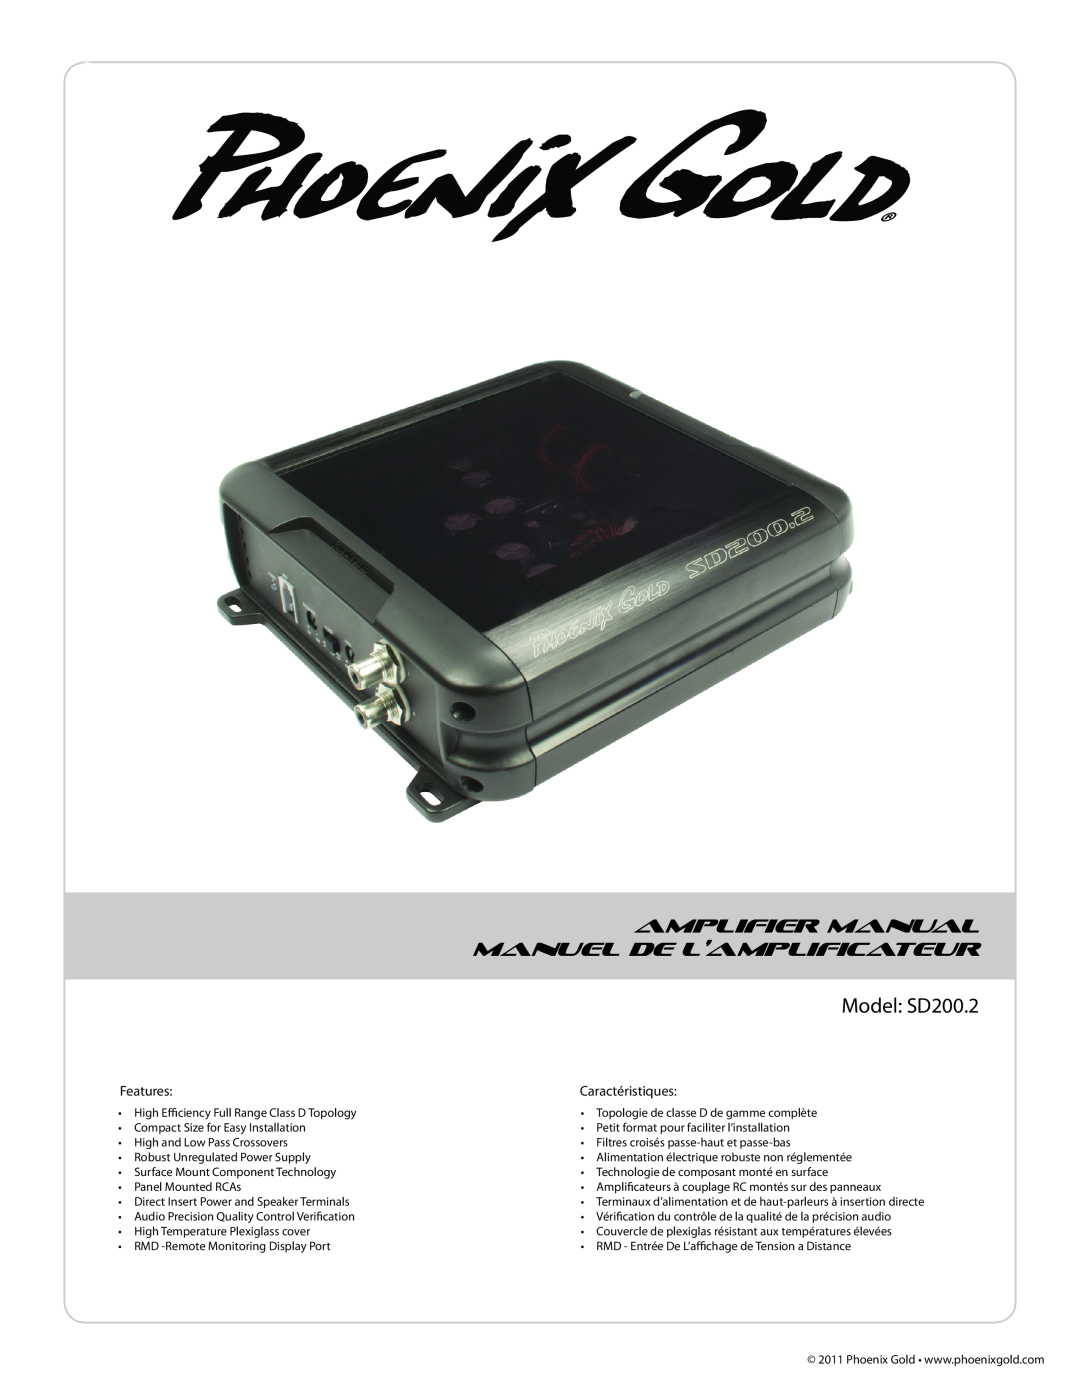 Phoenix Gold manual Amplifier Manual, Manuel De L’Amplificateur, Model SD200.2 